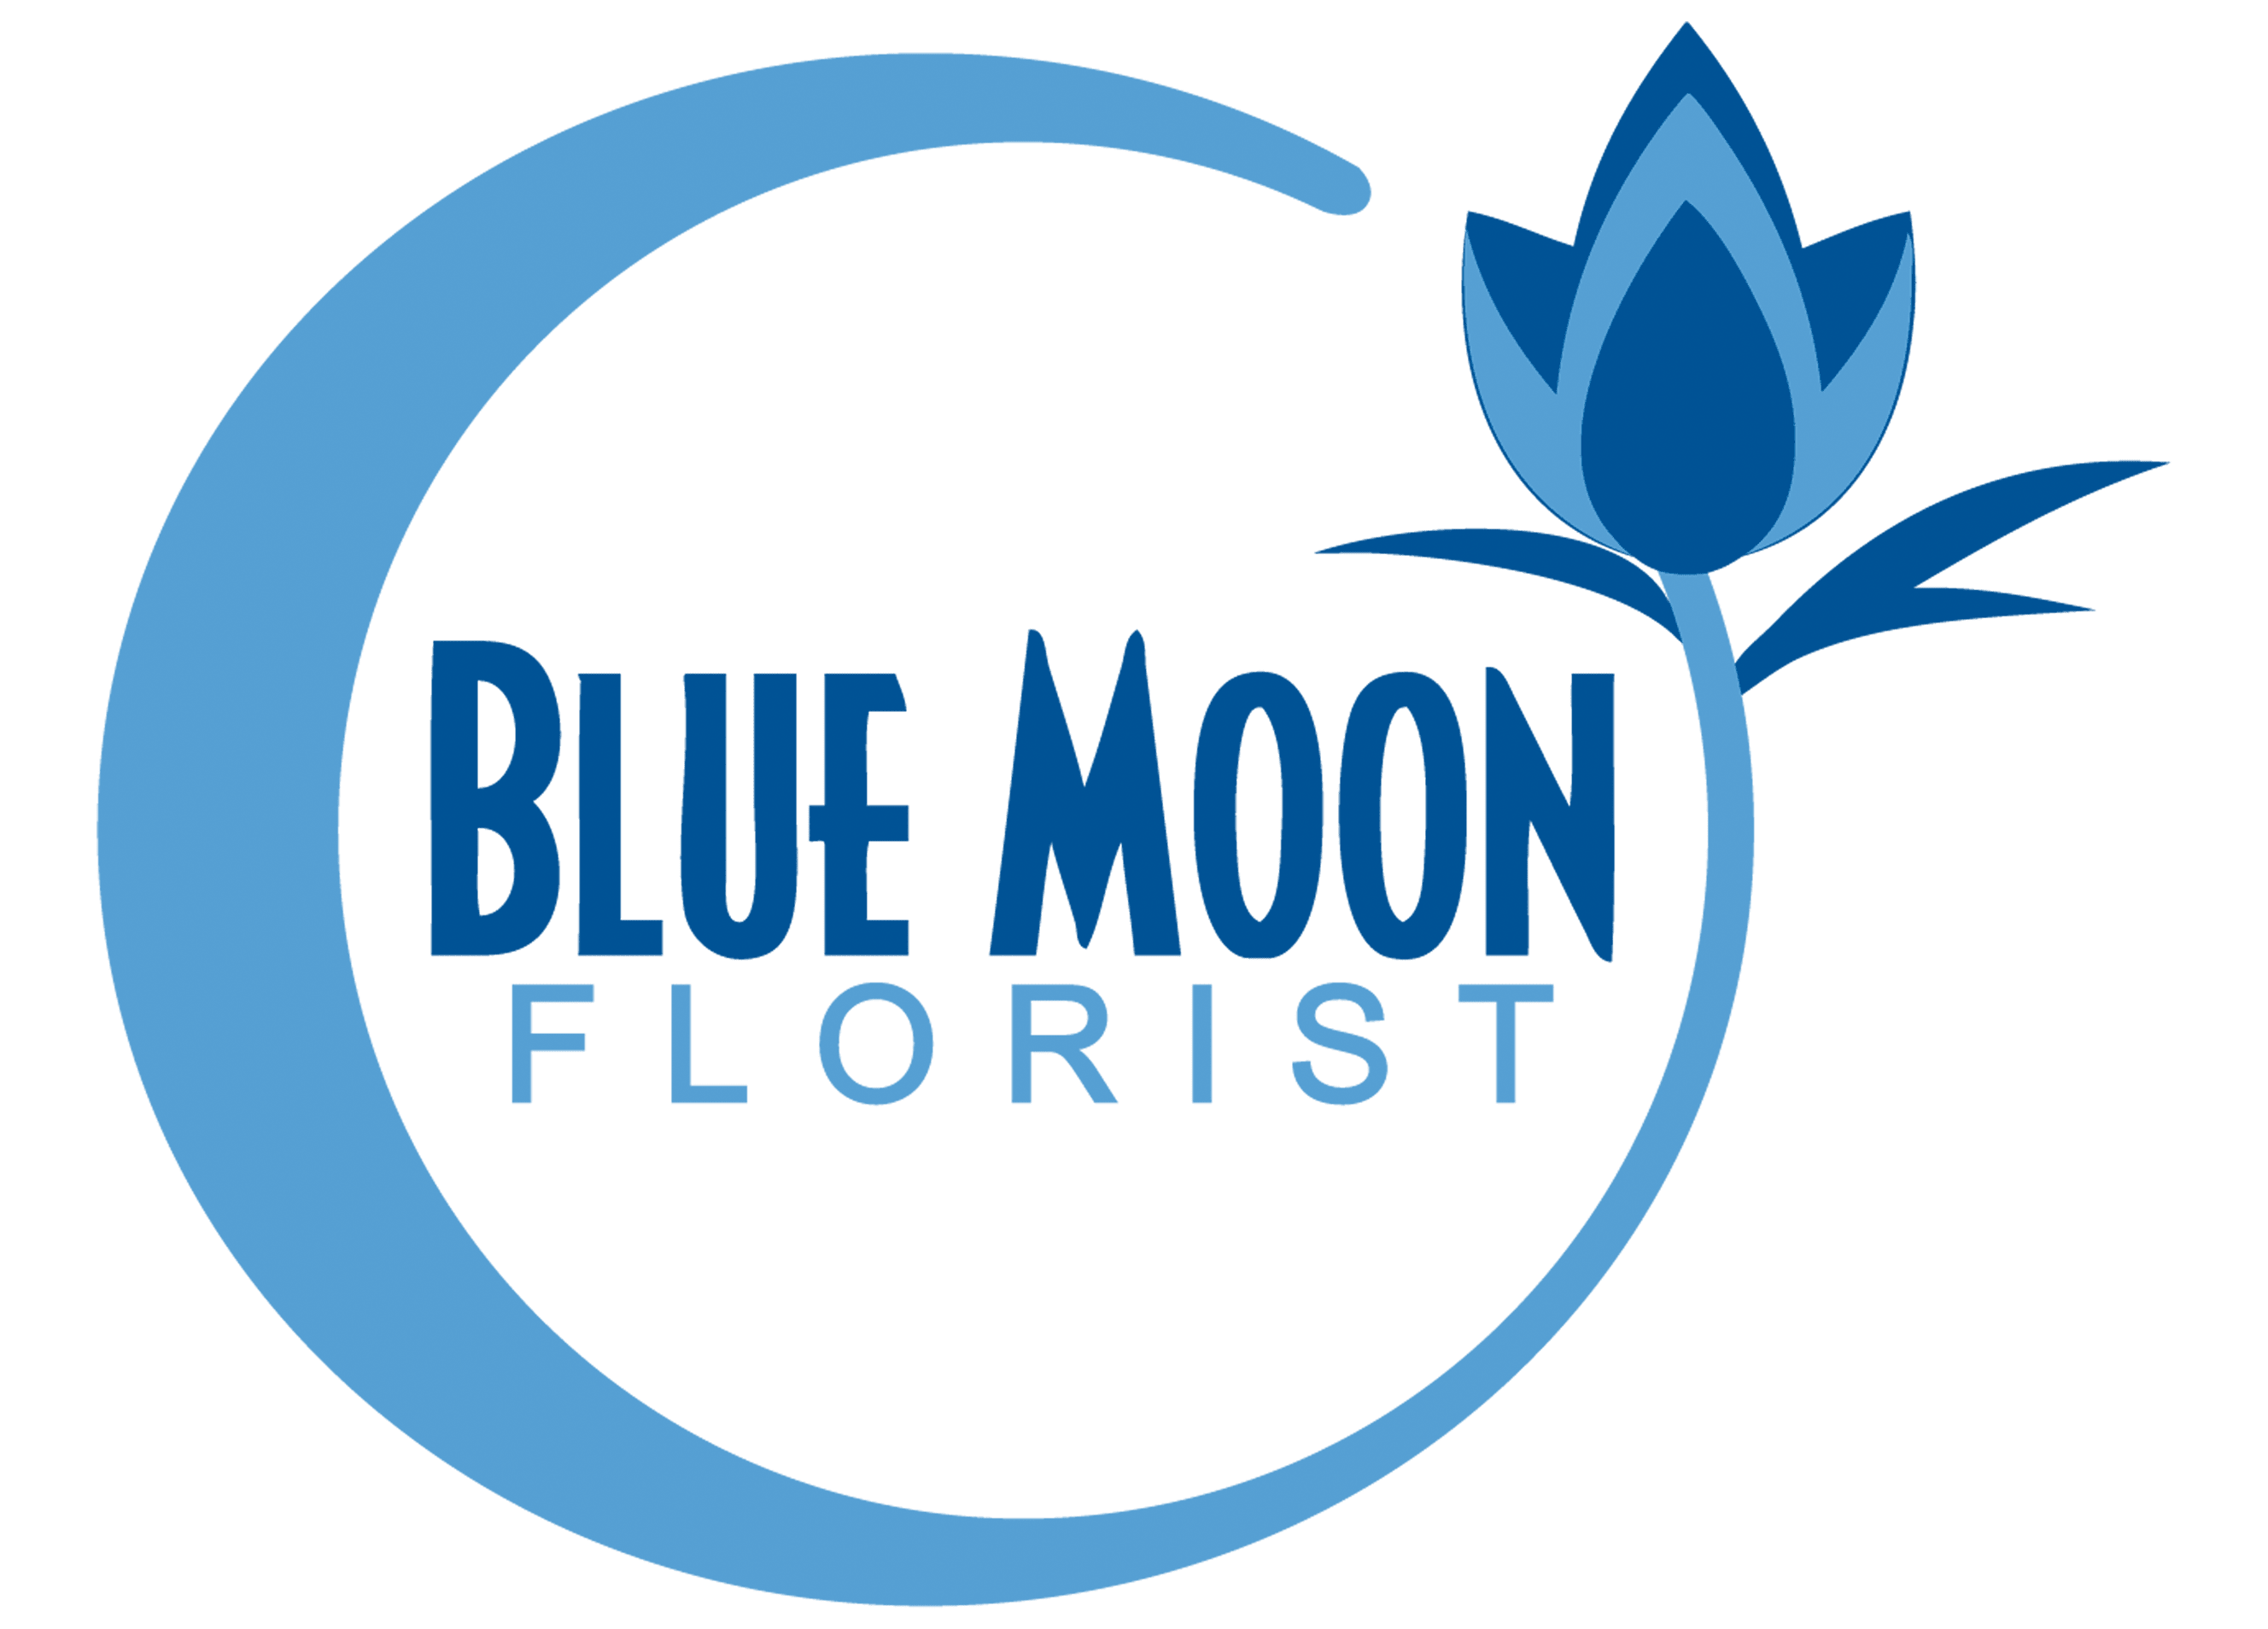 Blue Moon Florist